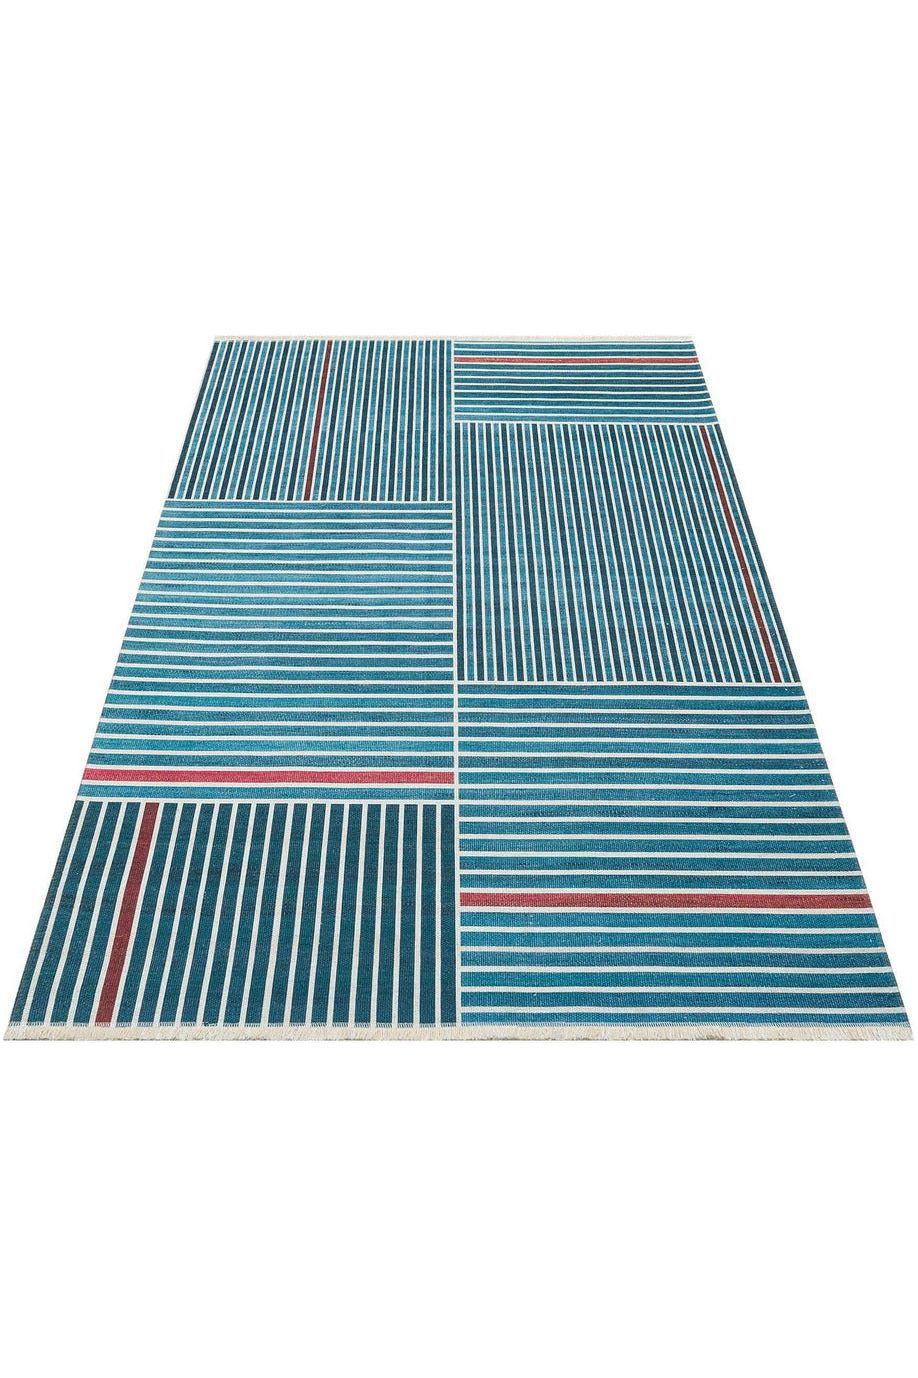 #Turkish_Carpets_Rugs# #Modern_Carpets# #Abrash_Carpets#Rb 08 Blue